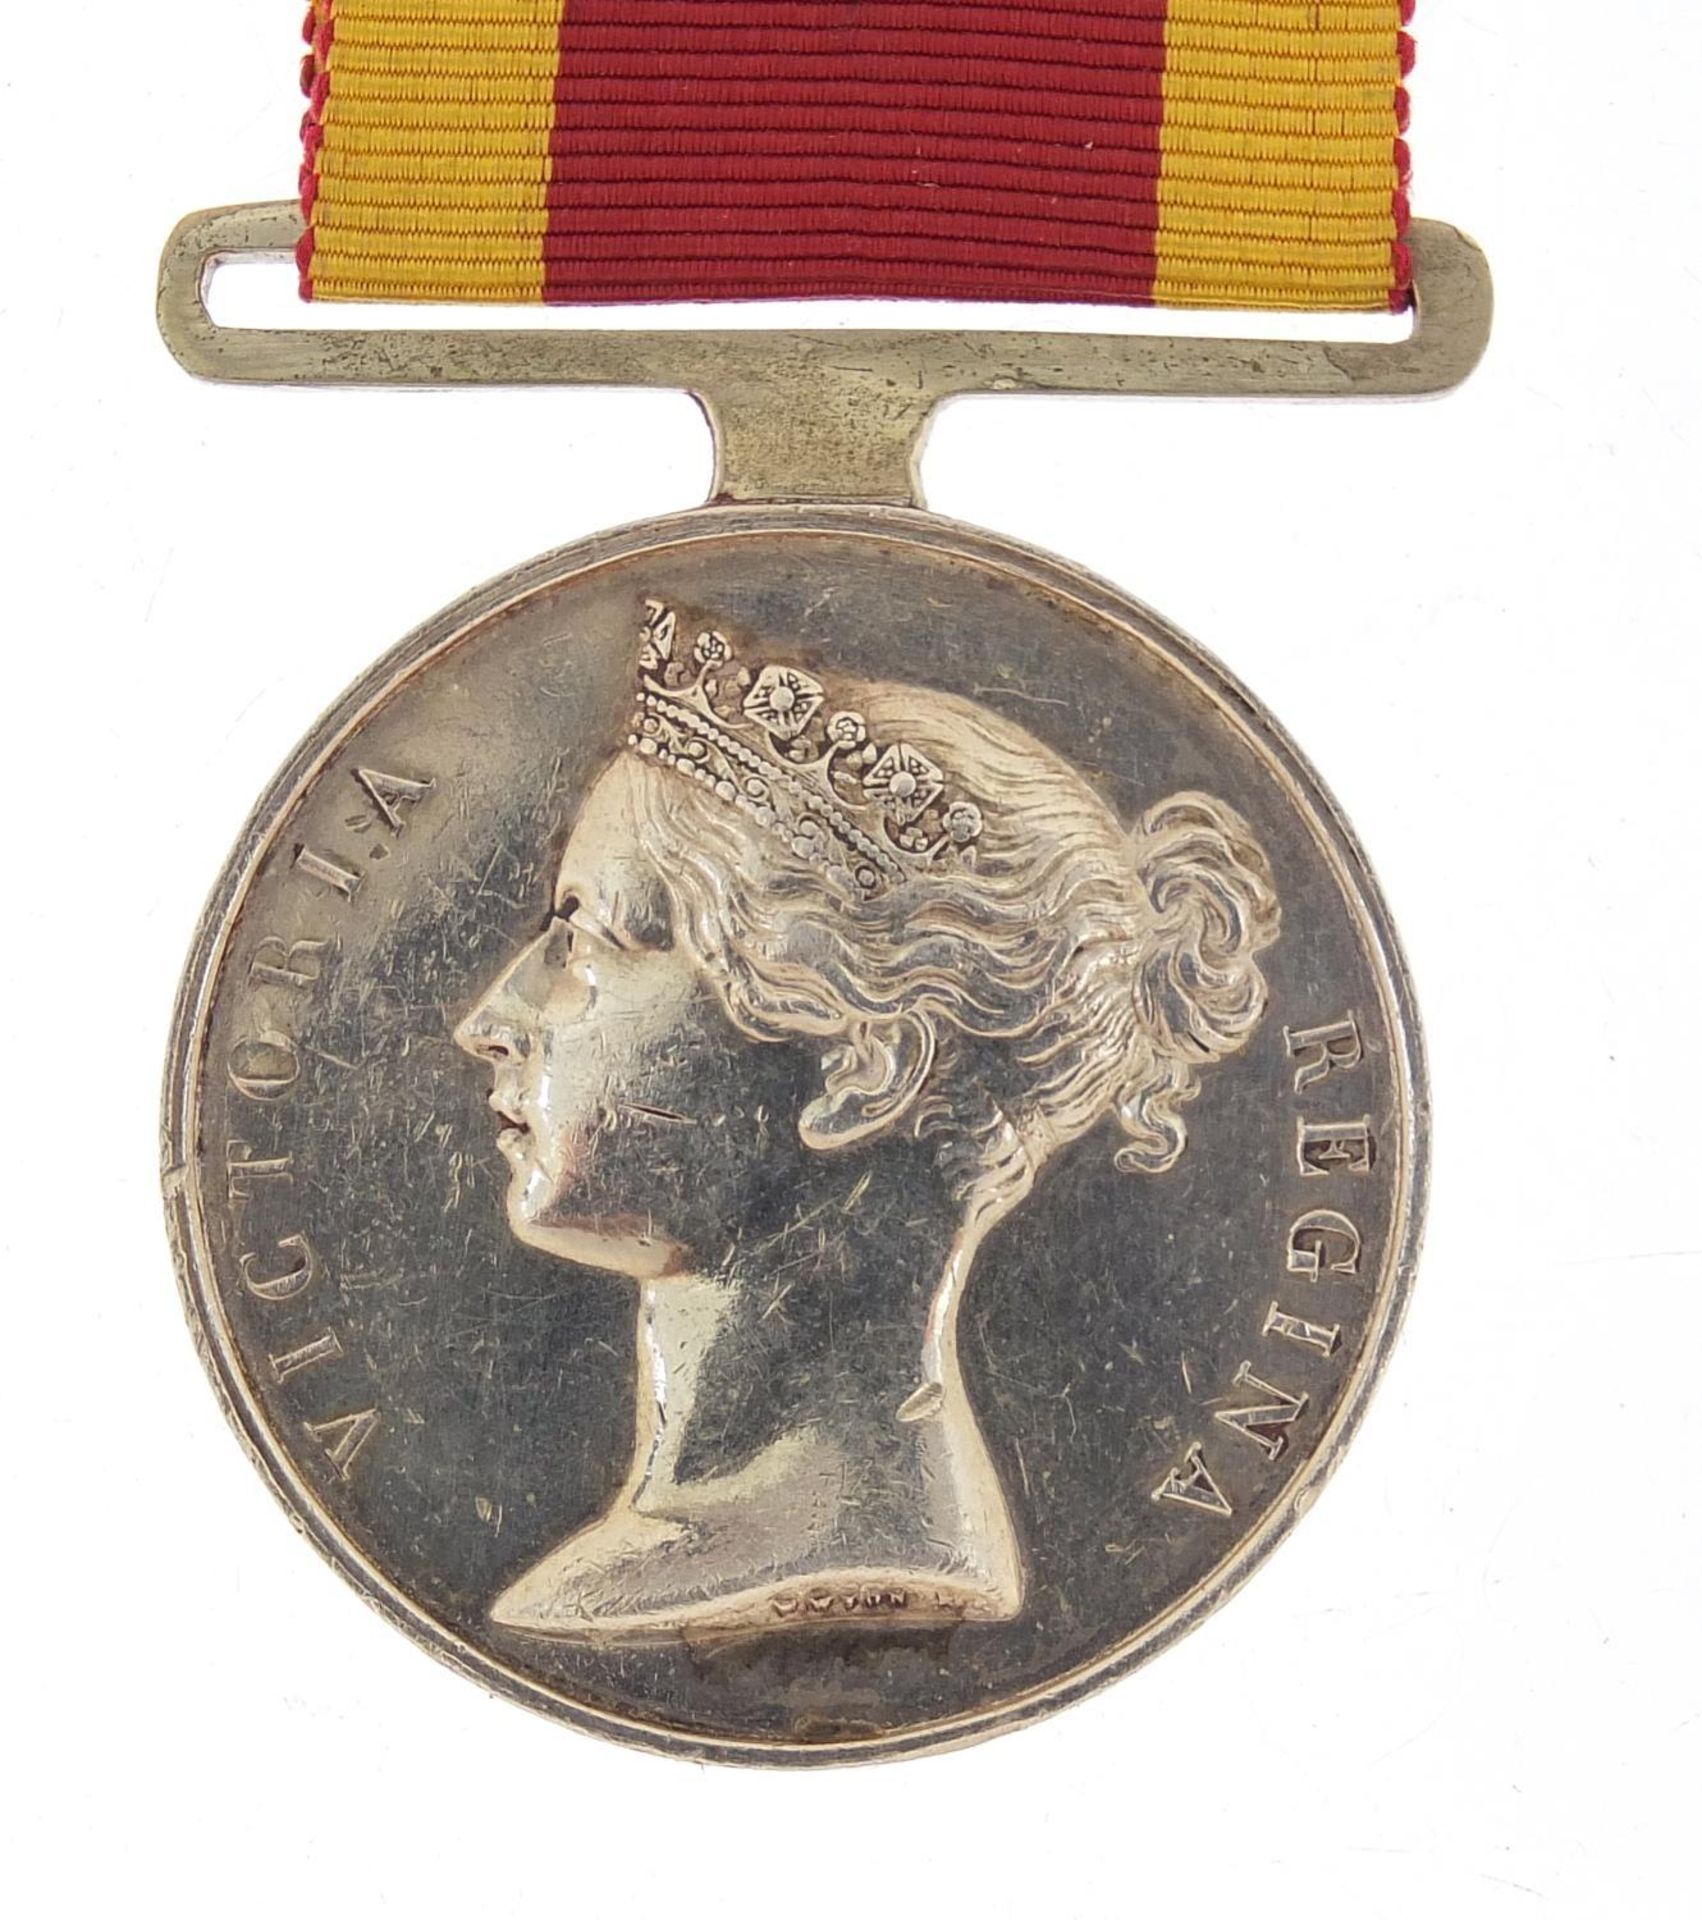 Victorian British military 1842 China War medal awarded to THOMAS BIRD HMS BLENHEIM